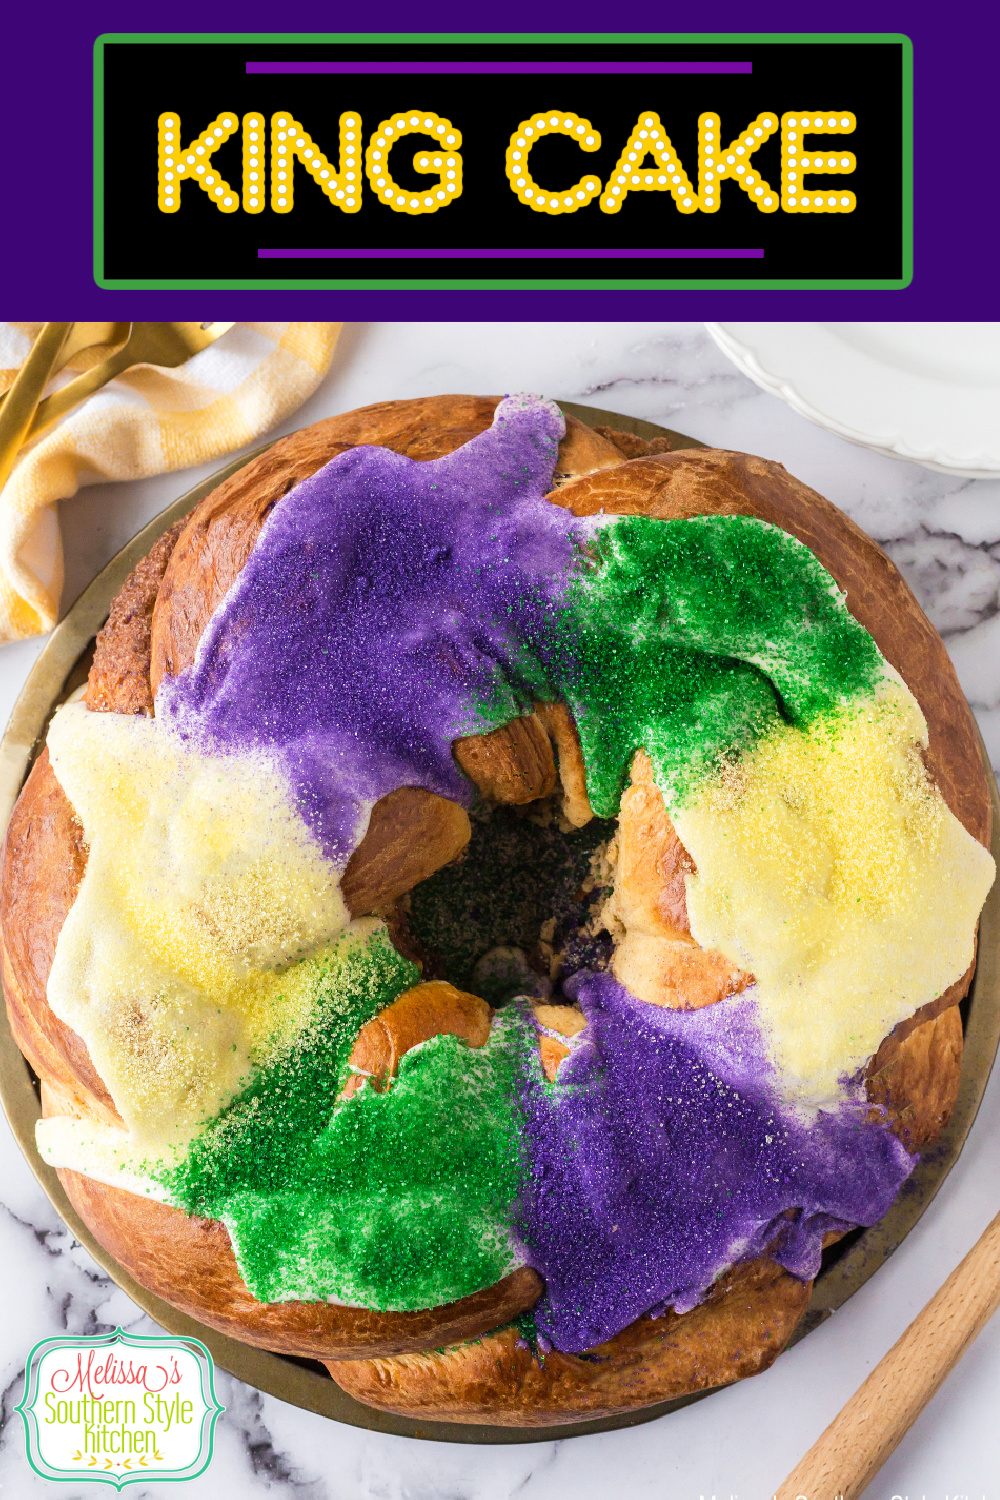 Celebrate Mardis Gras at home with this delicious homemade King Cake #kingcake #coffeecake #neworleans #cakerecipes #mardisgras #sweets #baking #homemadecake #brunch #desserts #neworleansrecipes